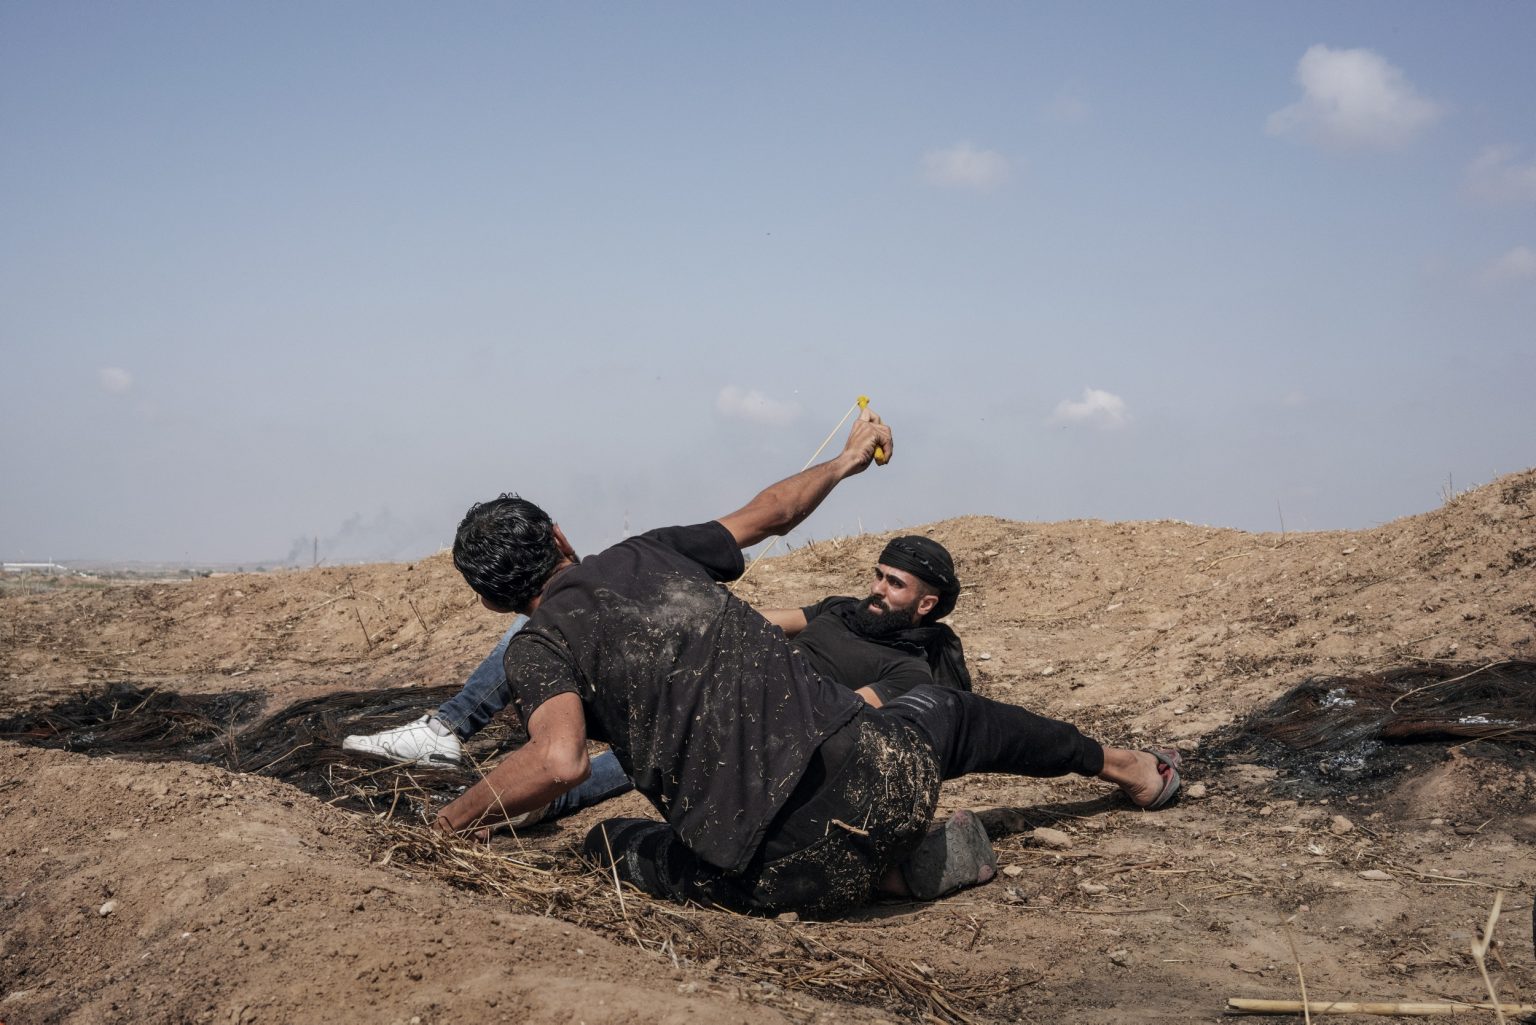 Gaza Strip, May 2018 - Palestinian protesters use slingshots to throw stones near the border fence with Israel during the demonstration. ><
Striscia di Gaza, maggio 2018 - Dimostranti palestinesi usano delle fionde per lanciare sassi verso il confine israeliano.